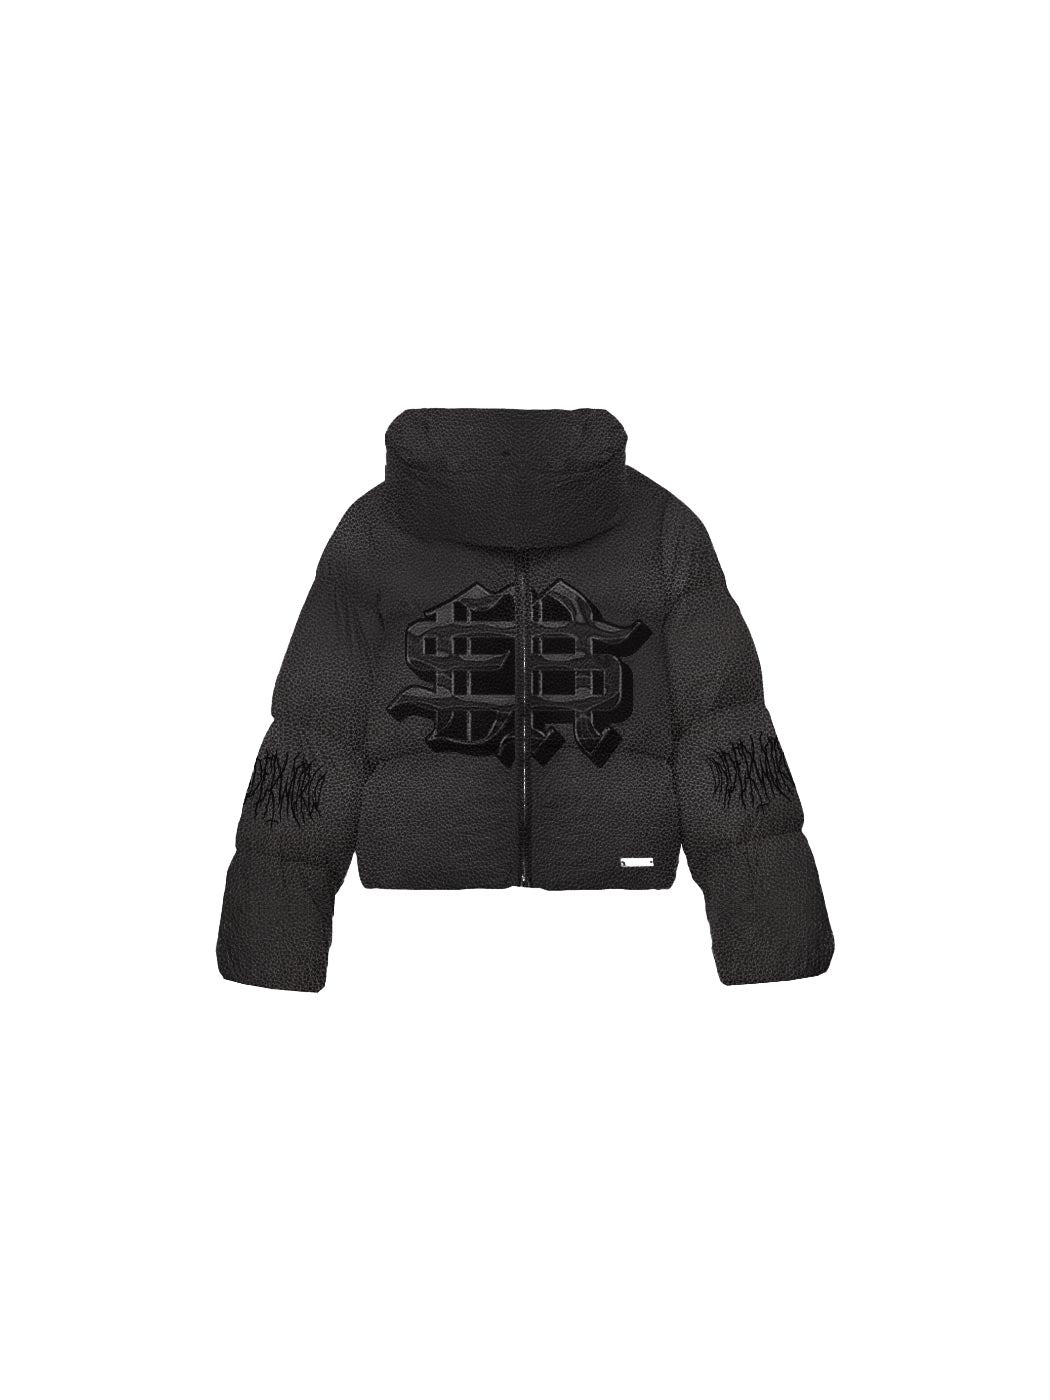 Sole et. Al Metro Leather Puffer Jacket : Black